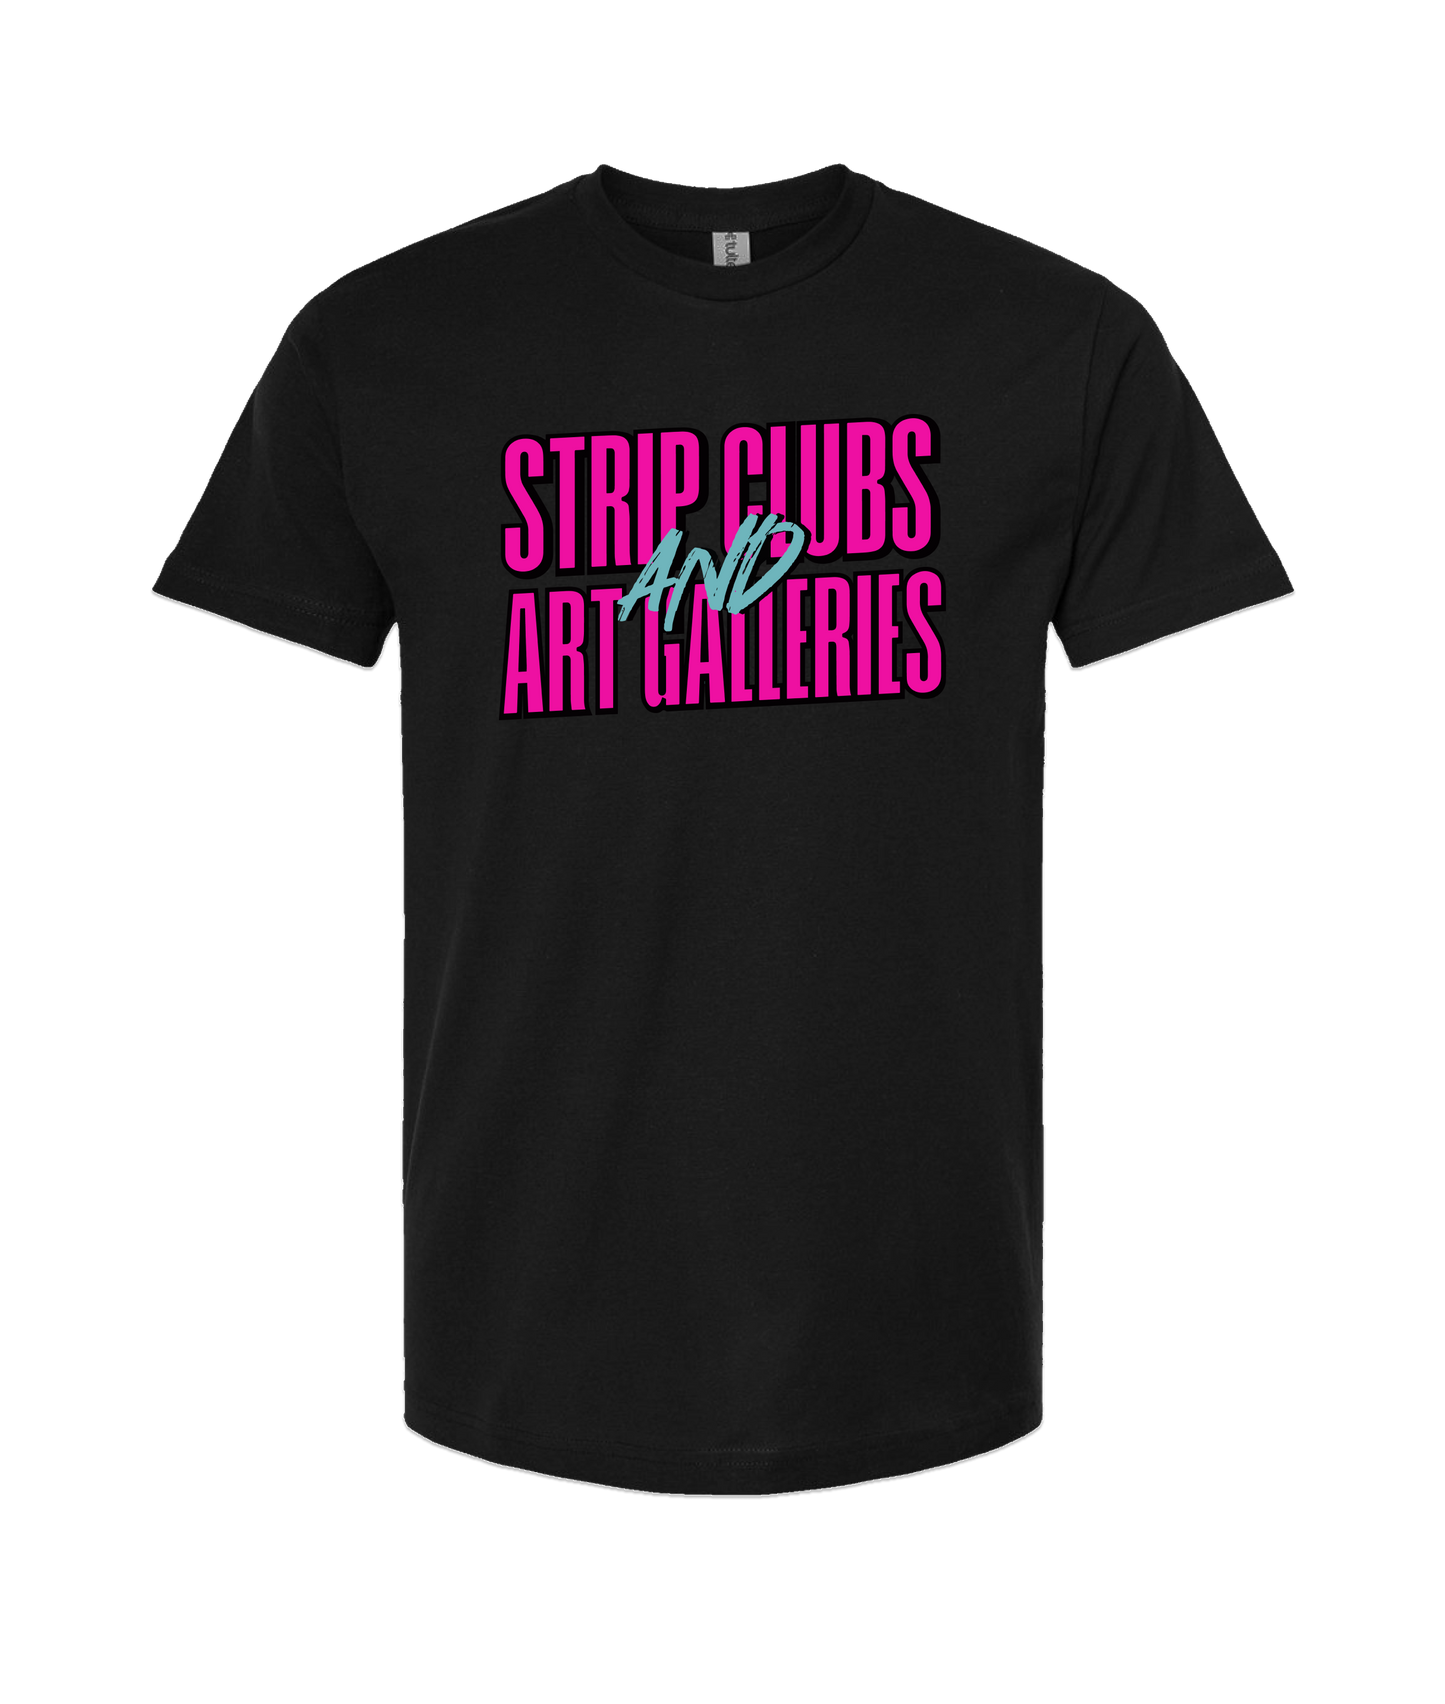 StripClubs and Art Galleries - Logo Tee - Black T-Shirt